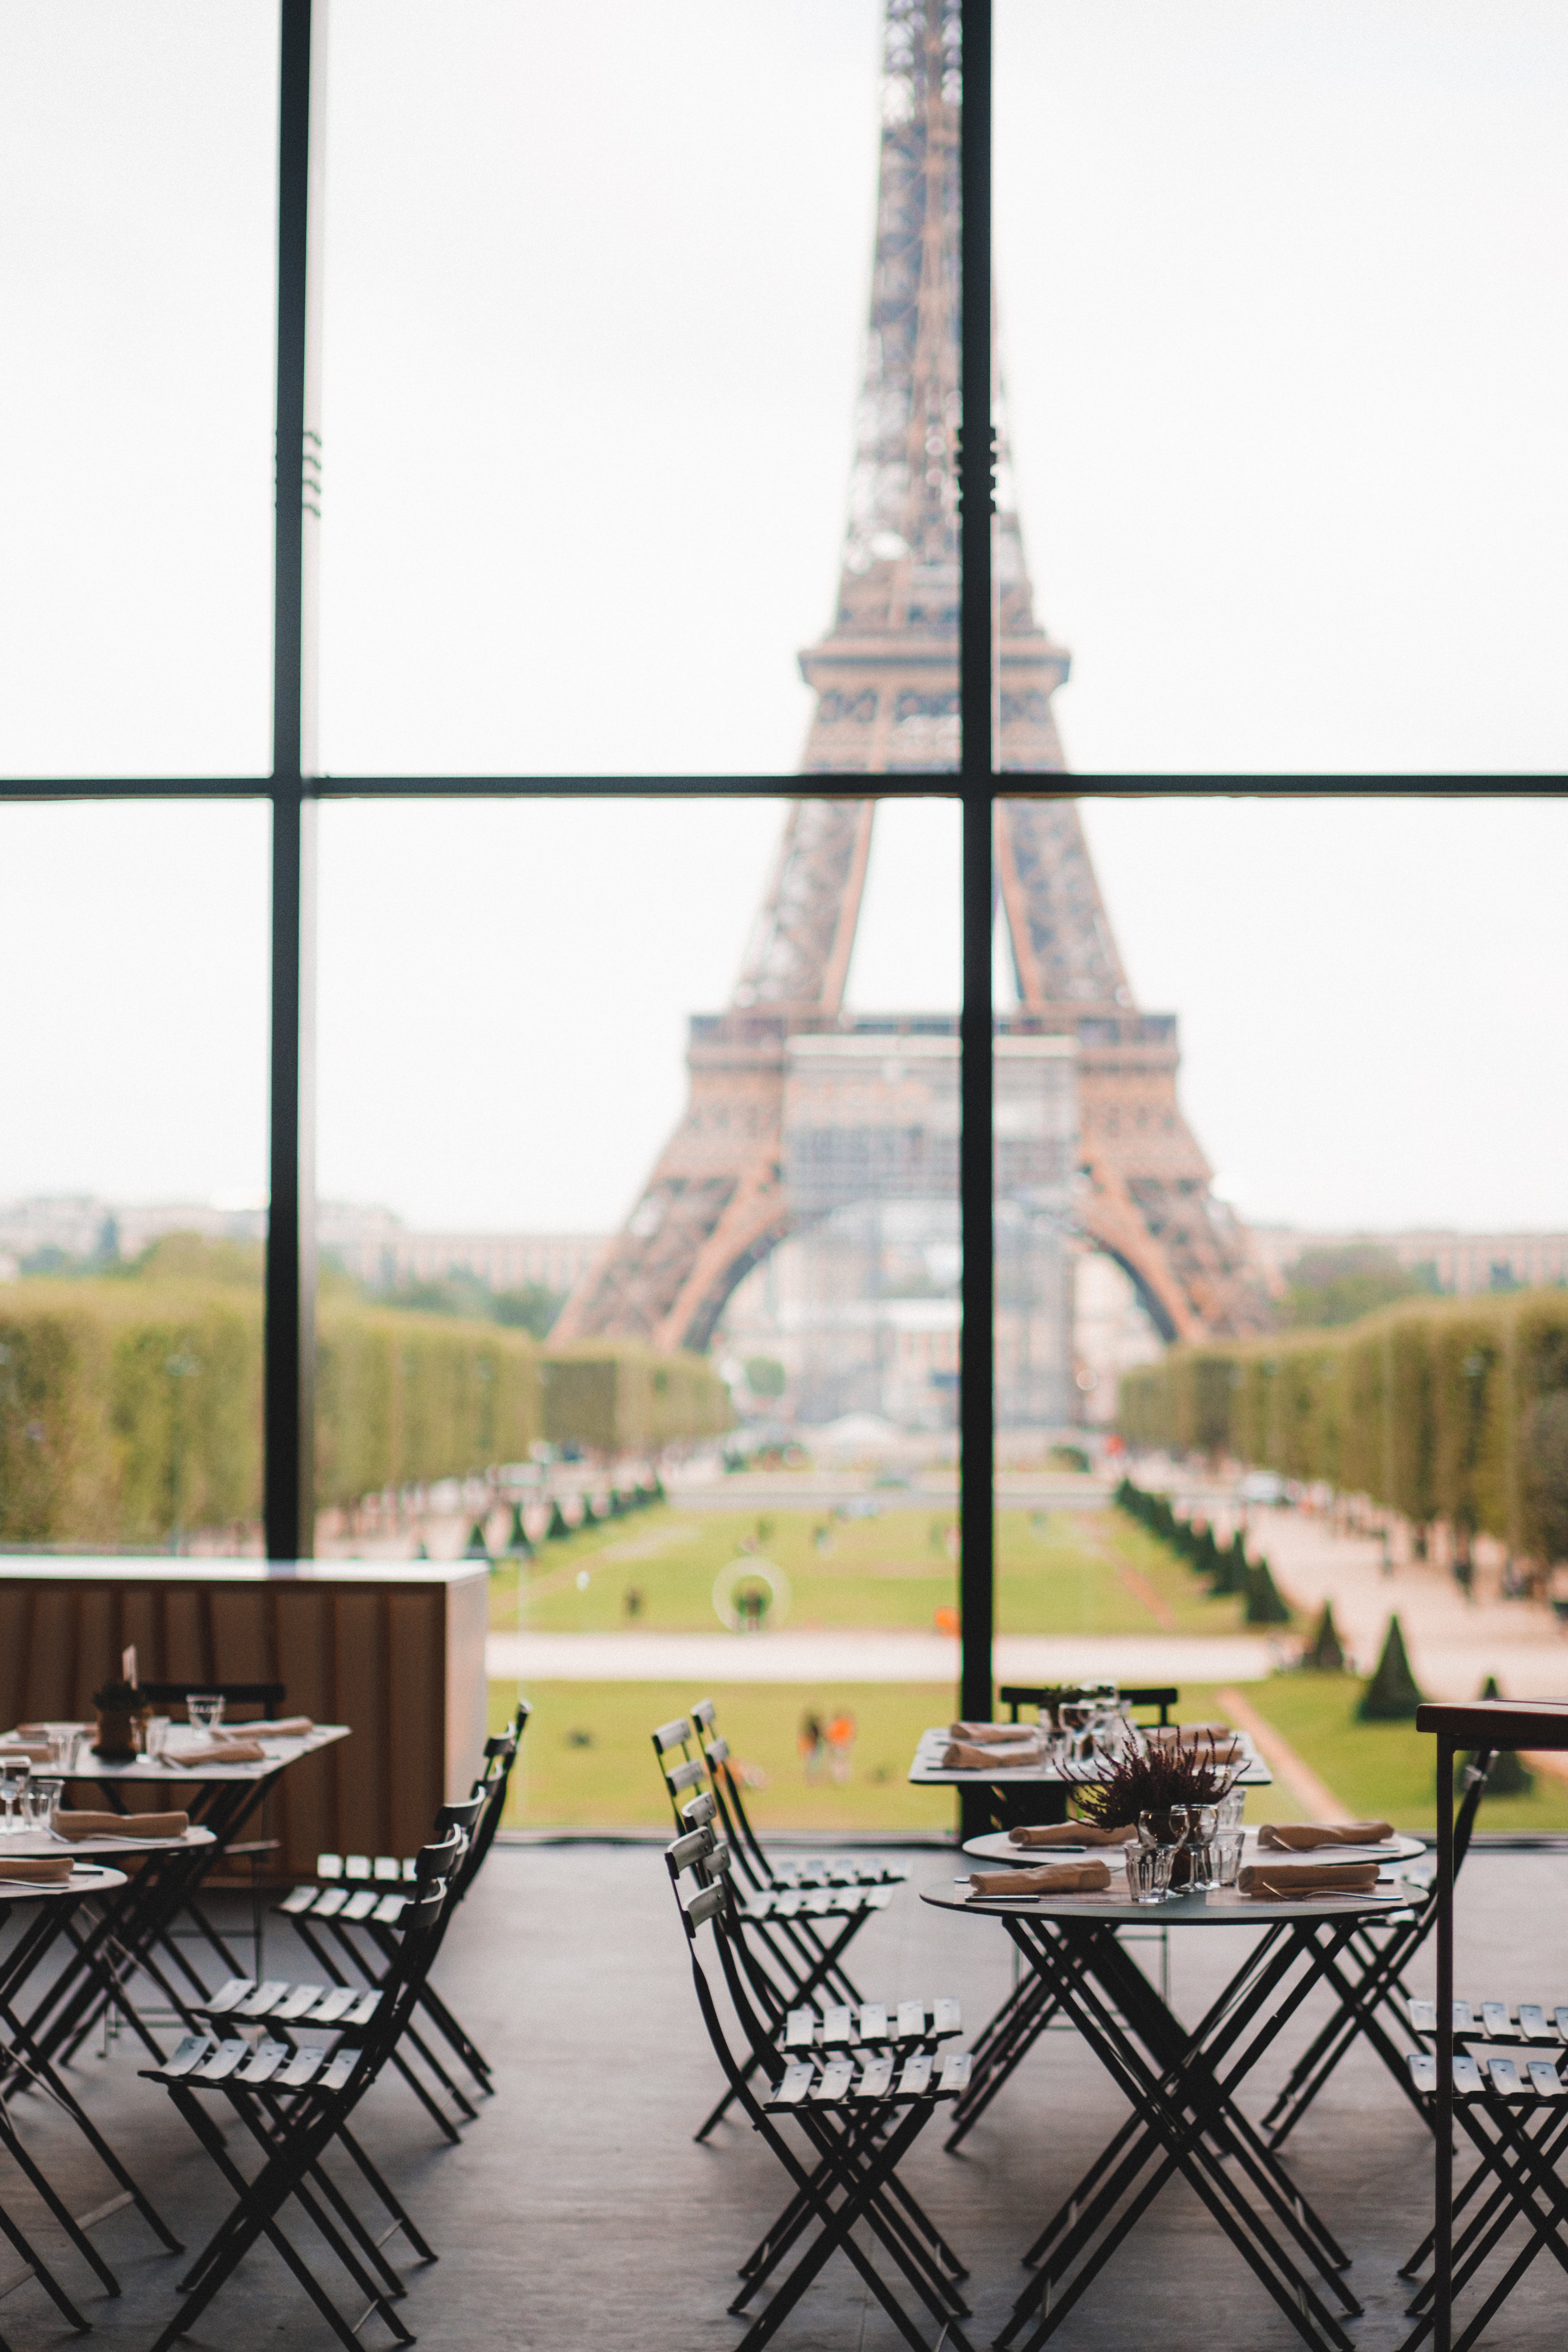 File:Paris Eiffel tower restaurant (3276039452).jpg - Wikimedia Commons